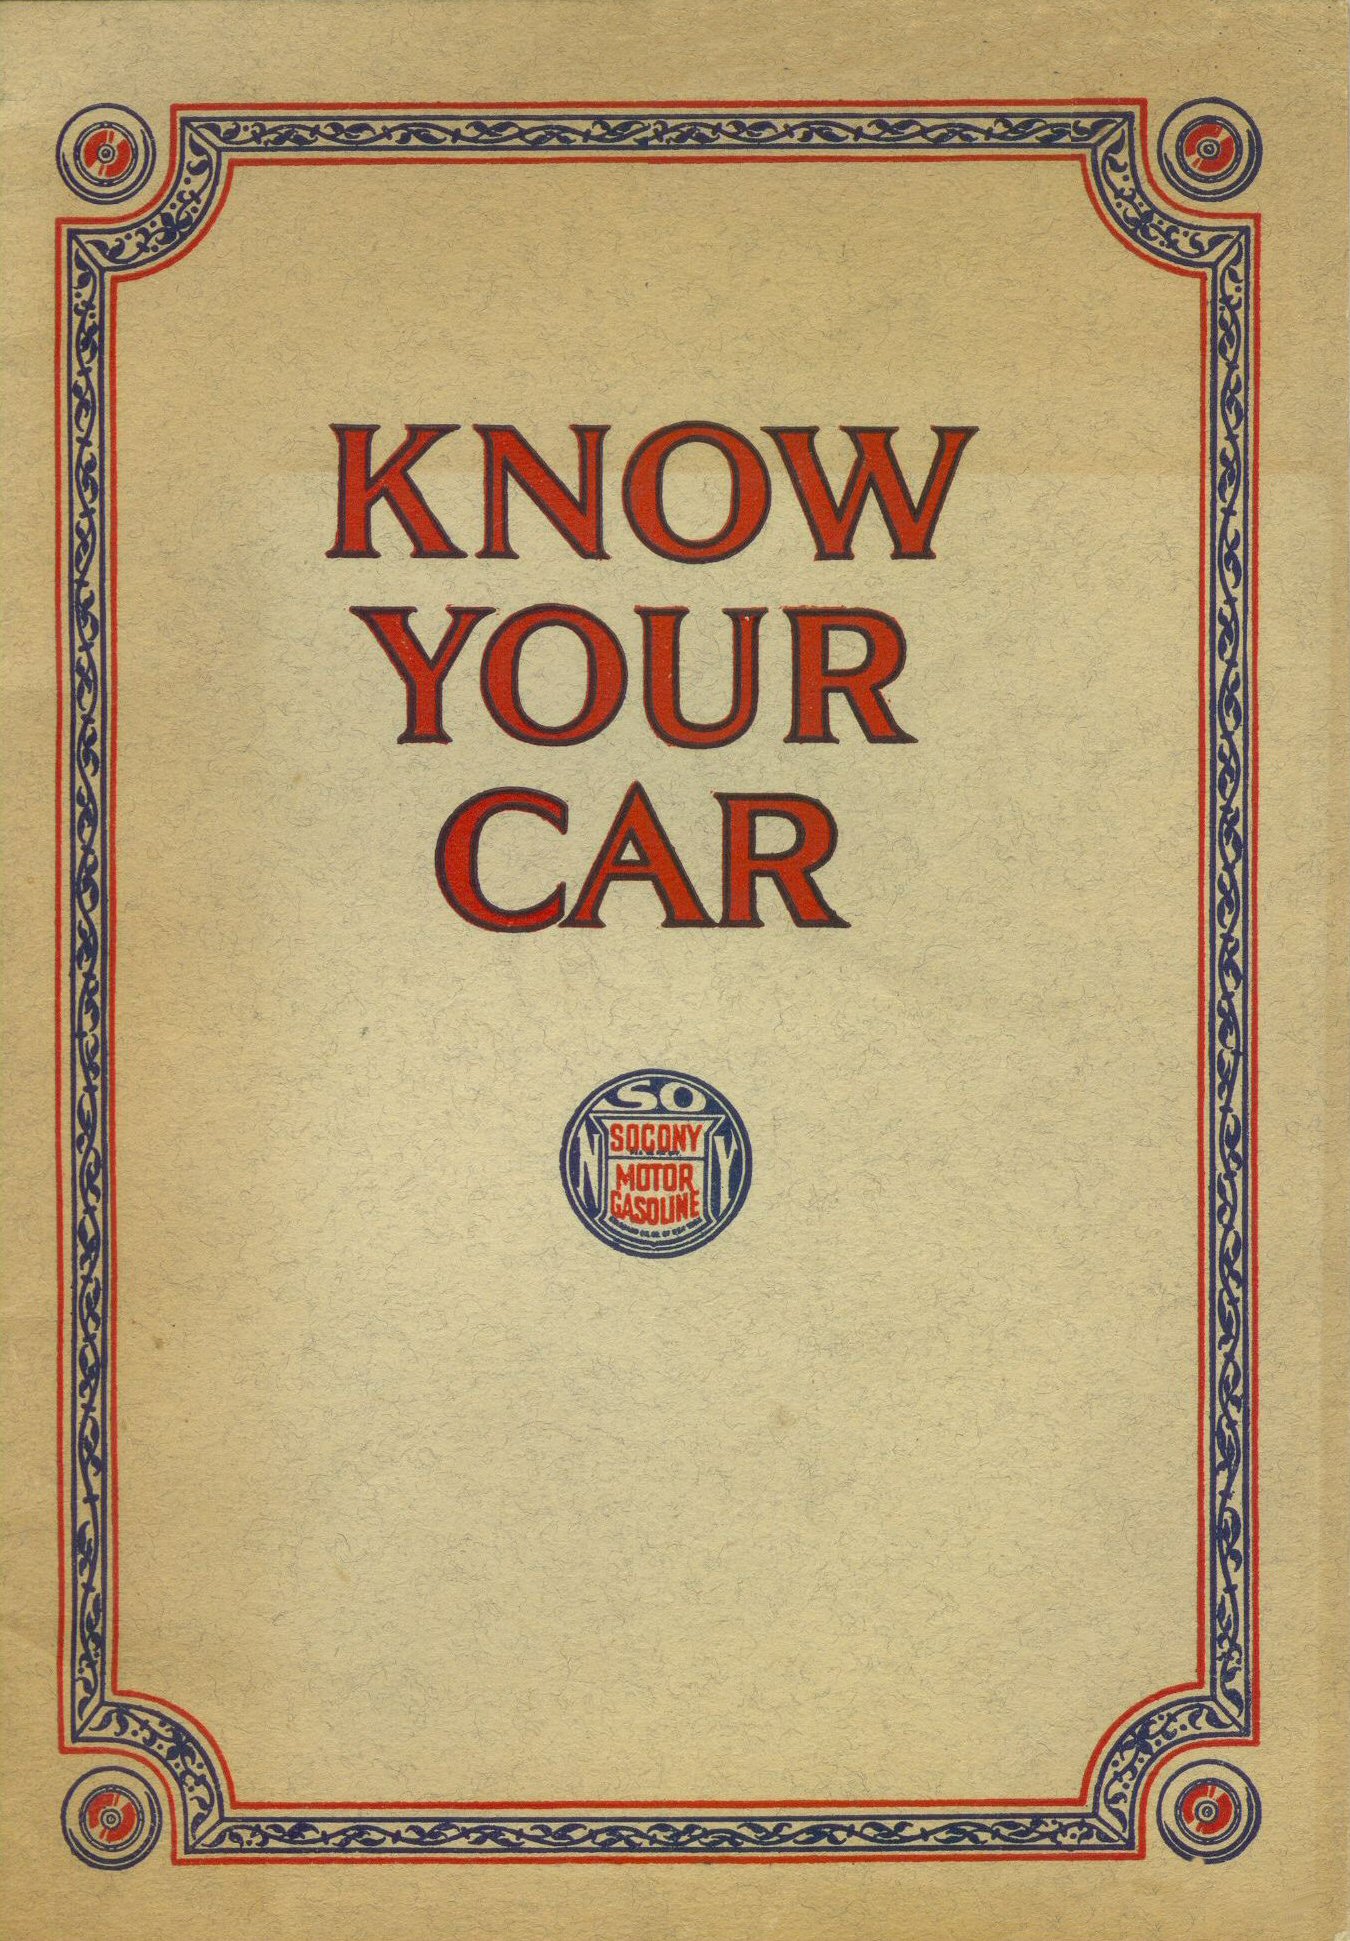 1928 Know Your Car Handbook Page 2